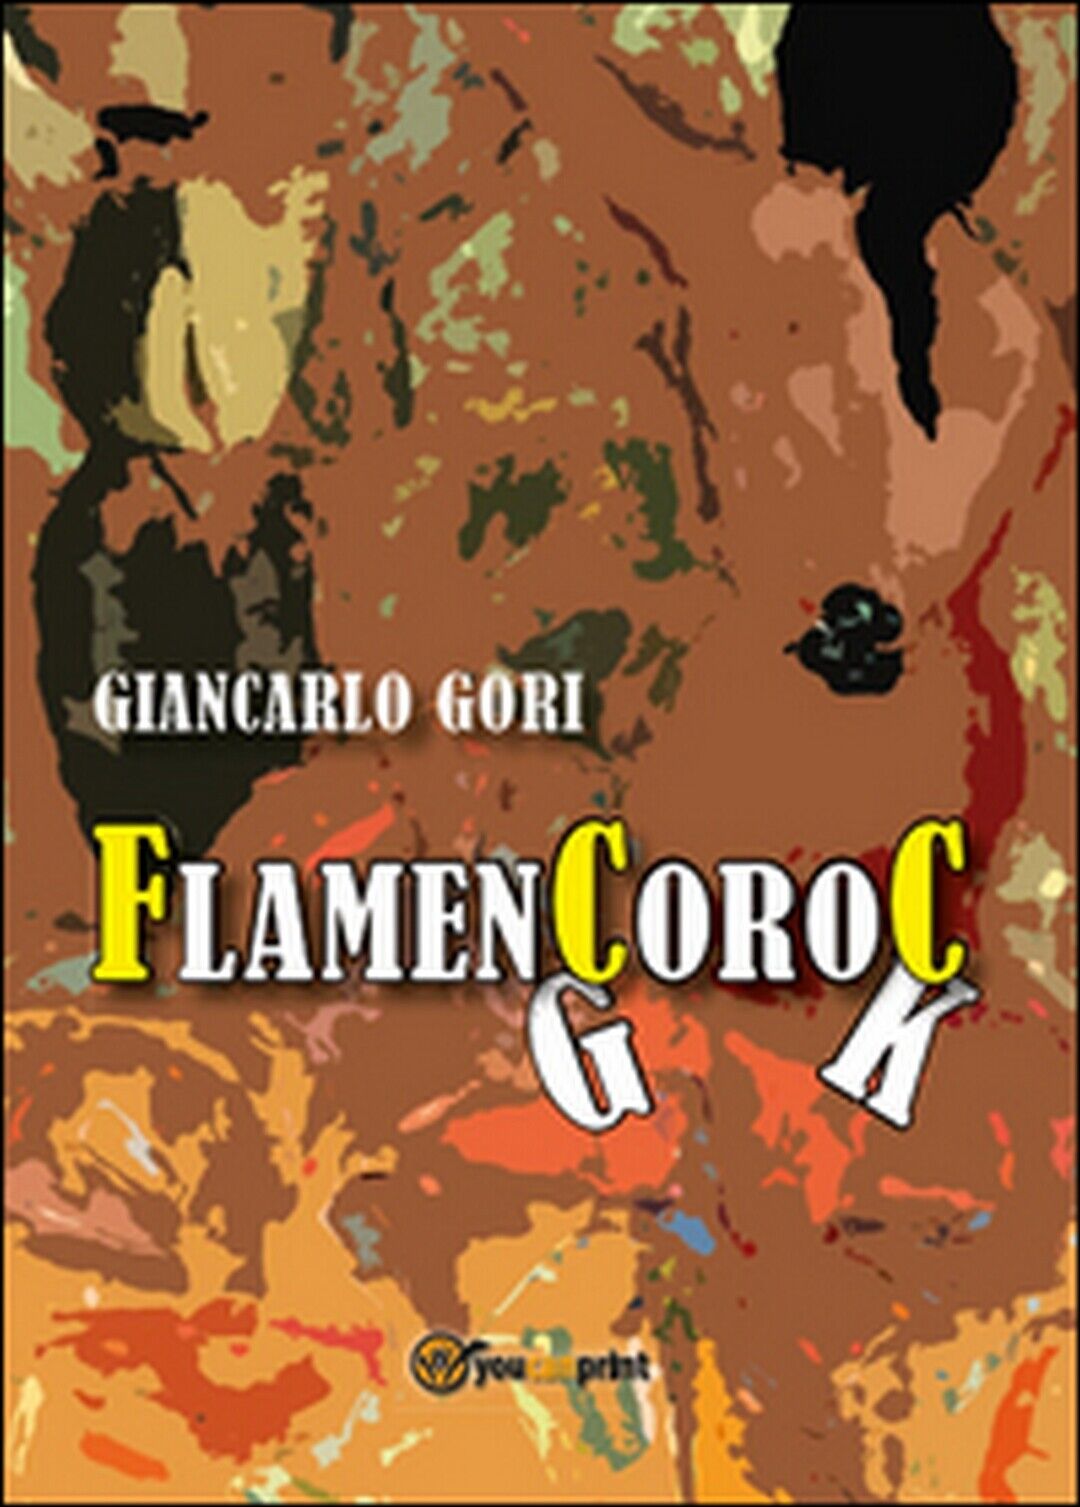 Flamencoroc  di Giancarlo Gori,  2015,  Youcanprint